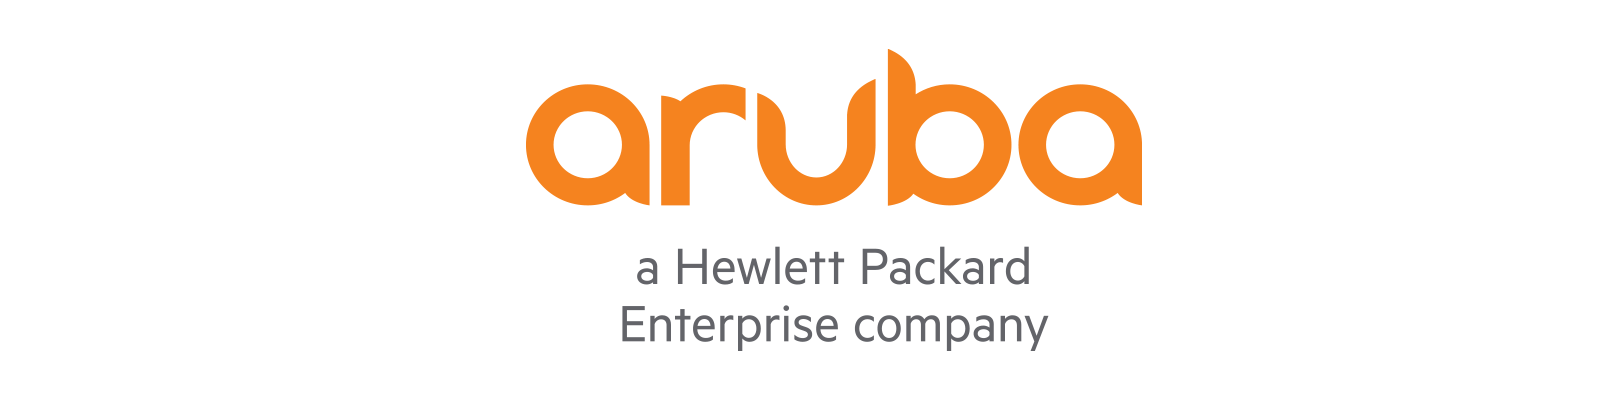 Network Phone Company Logo - Aruba | Enterprise Networking and Security Solutions | Aruba